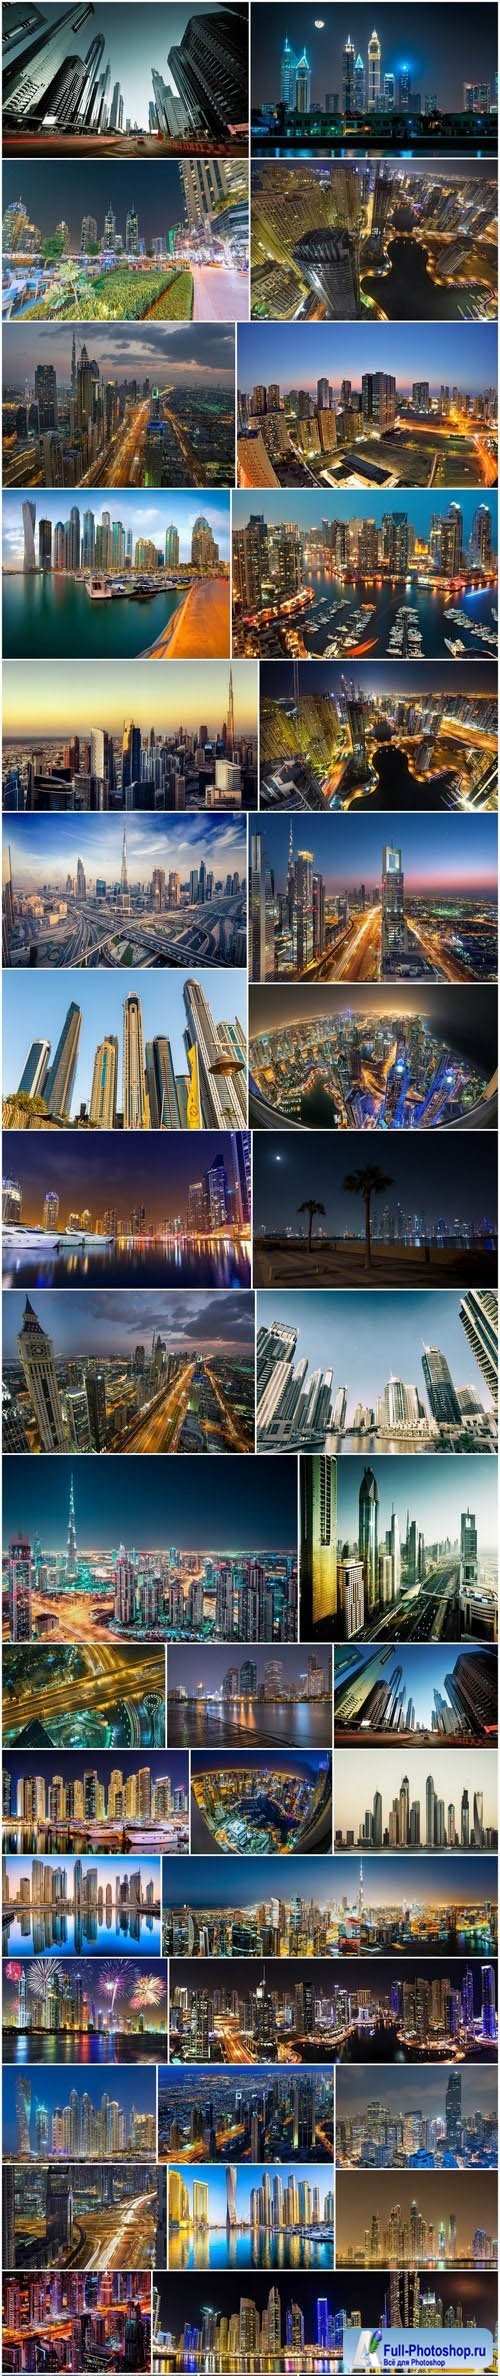 Dubai Travel - Skyscrapers, Set of 42xUHQ JPEG Professional Stock Images